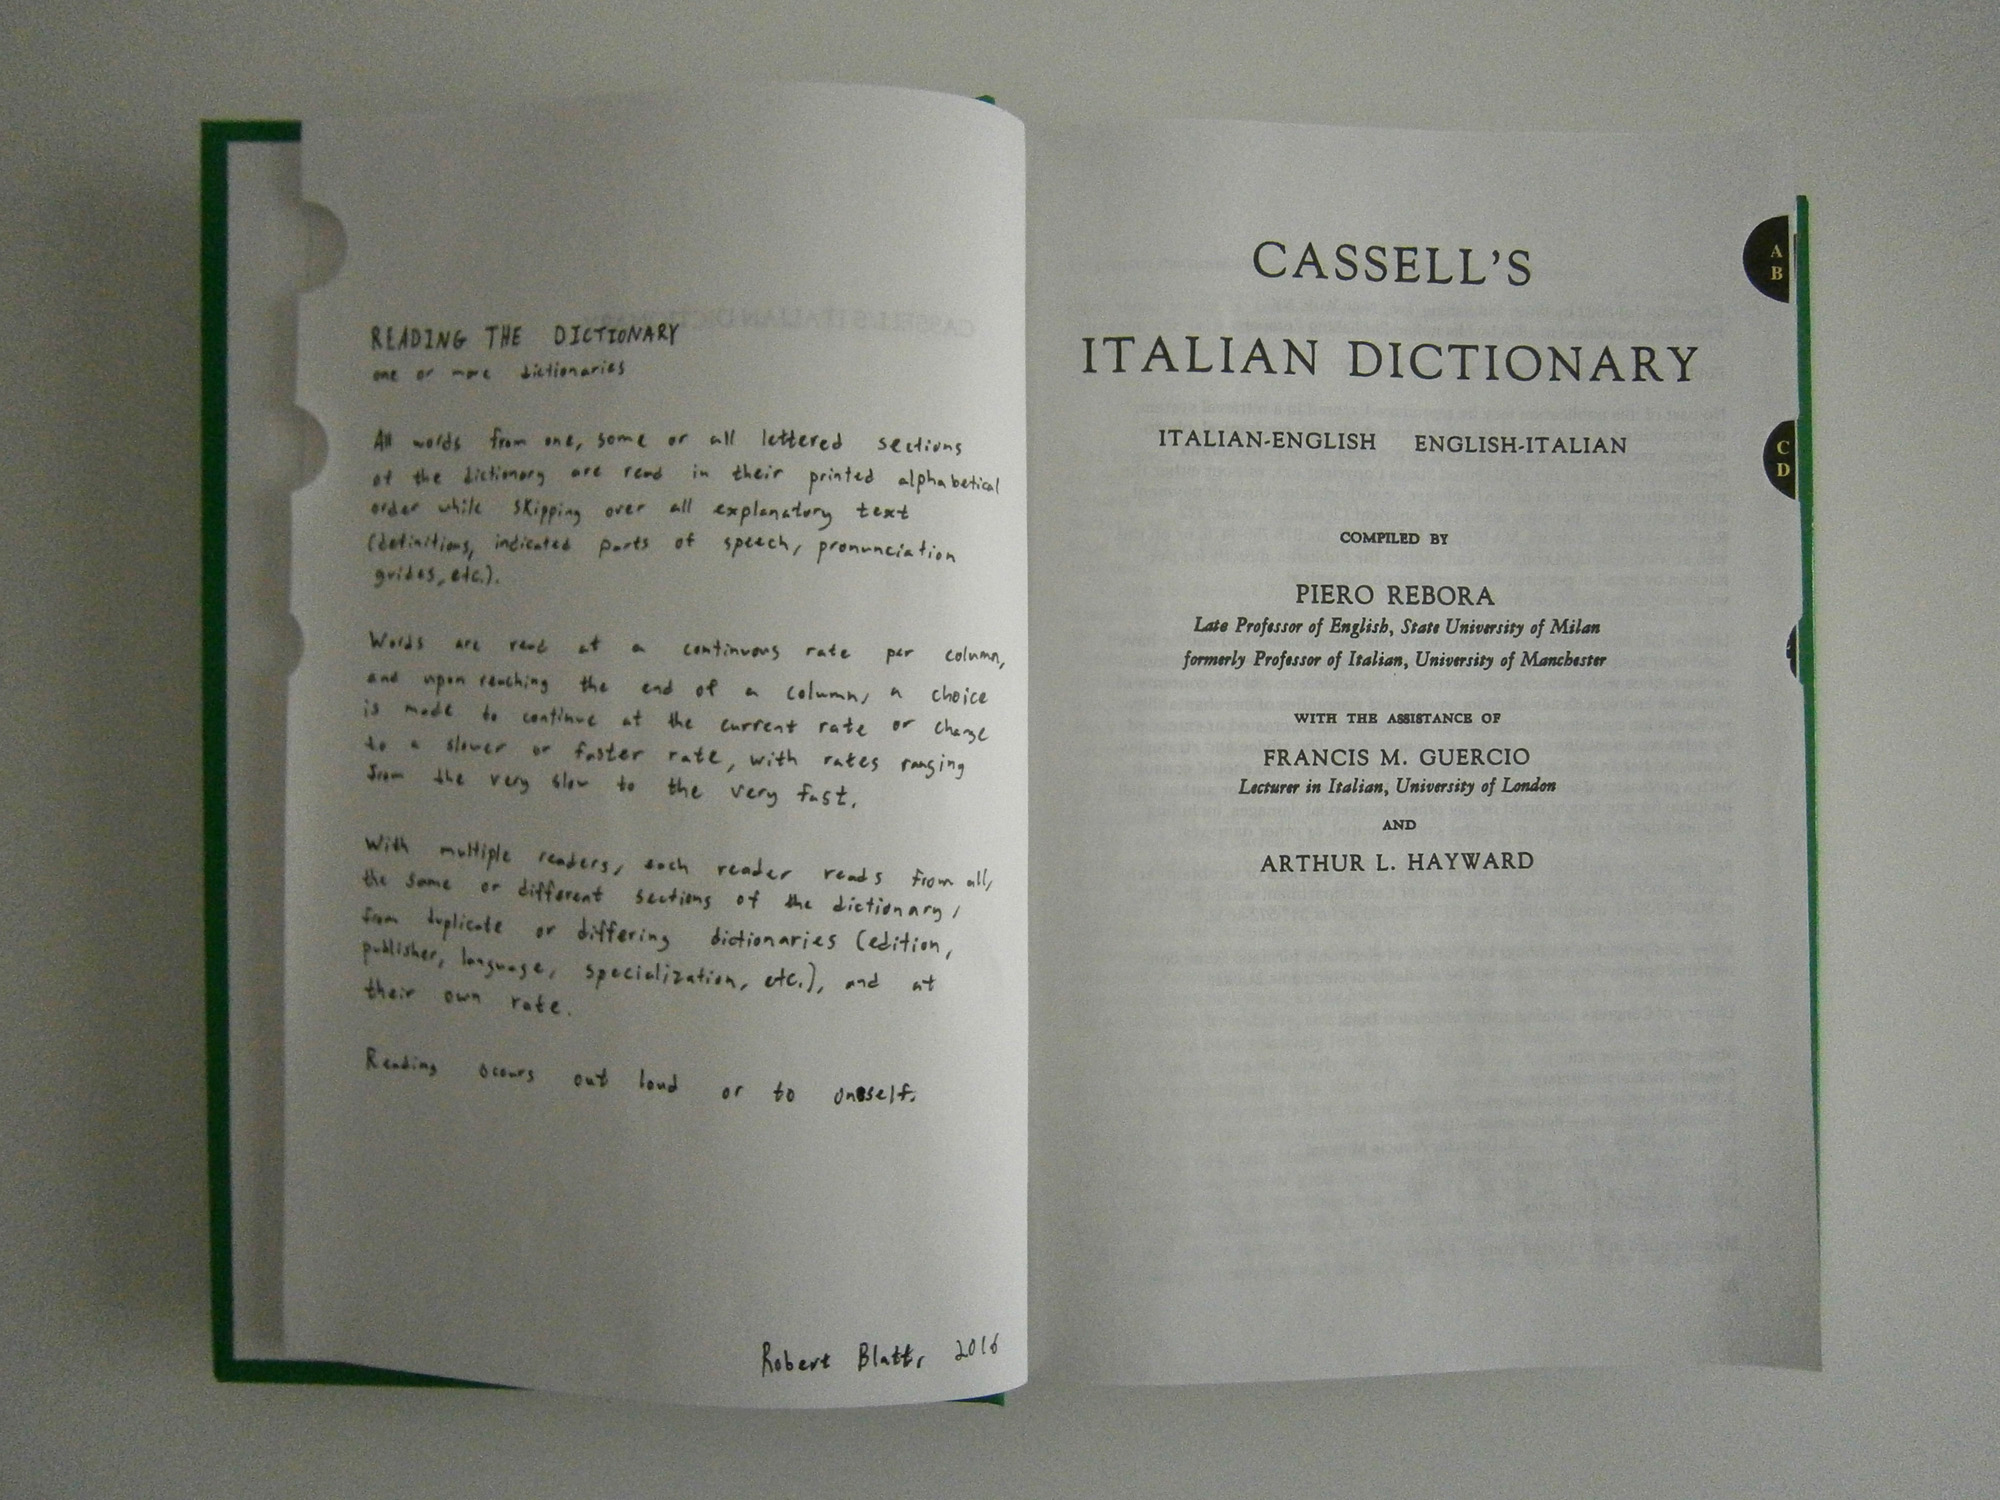 Reading The Dictionary by Robert Blatt, Cassell's Italian Dictionary